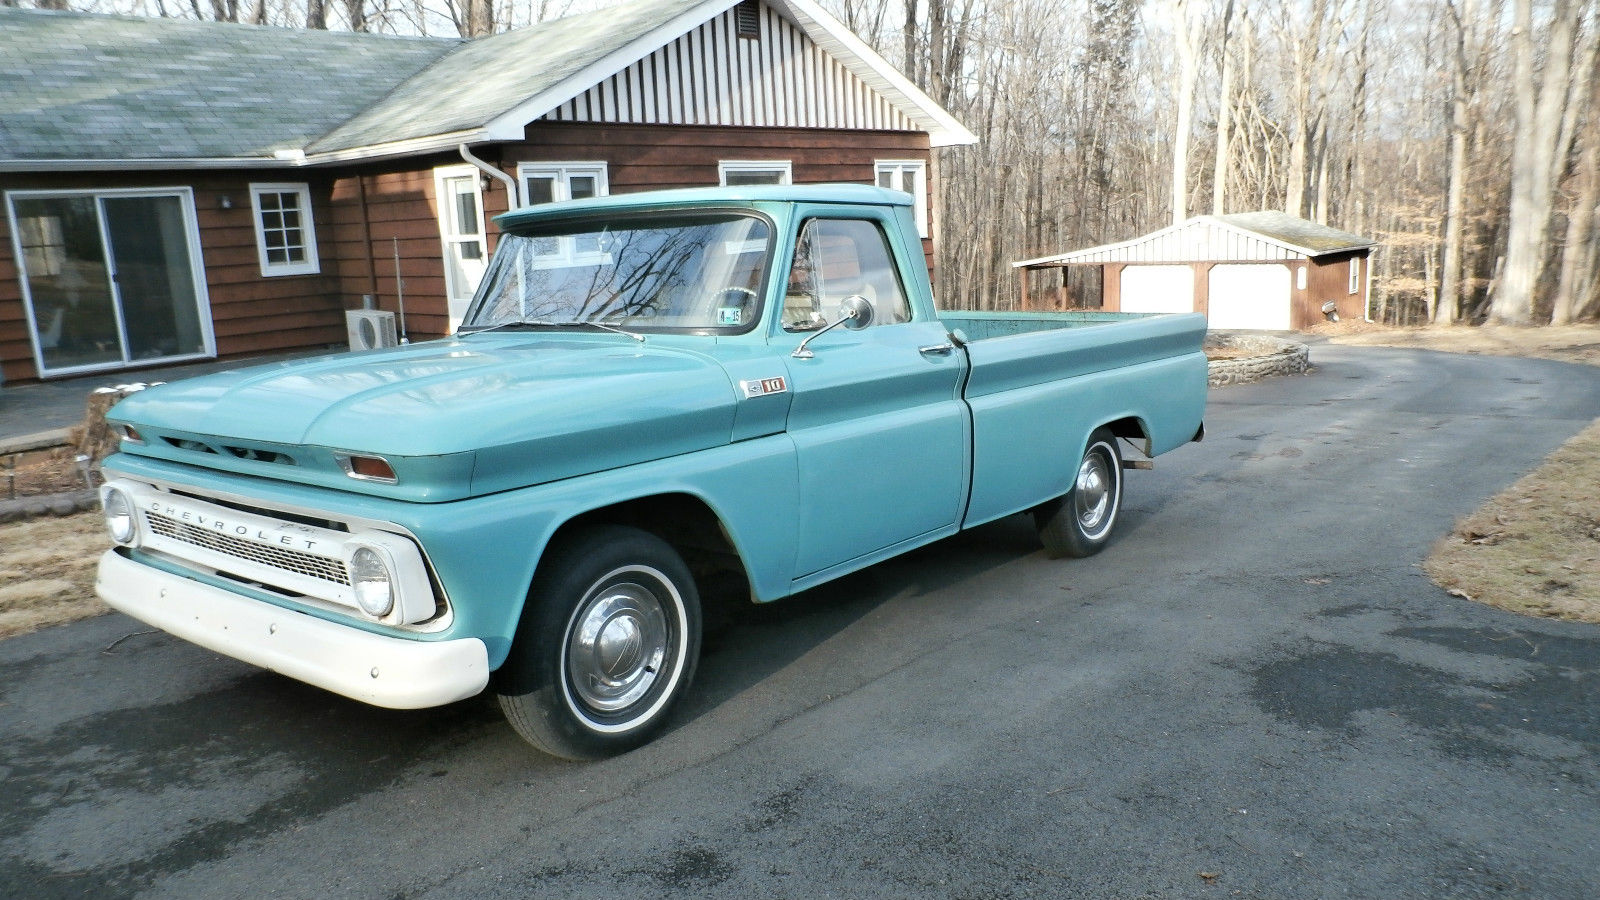 1965 Chevrolet C-10 for sale in Cresco, Pennsylvania, United States.